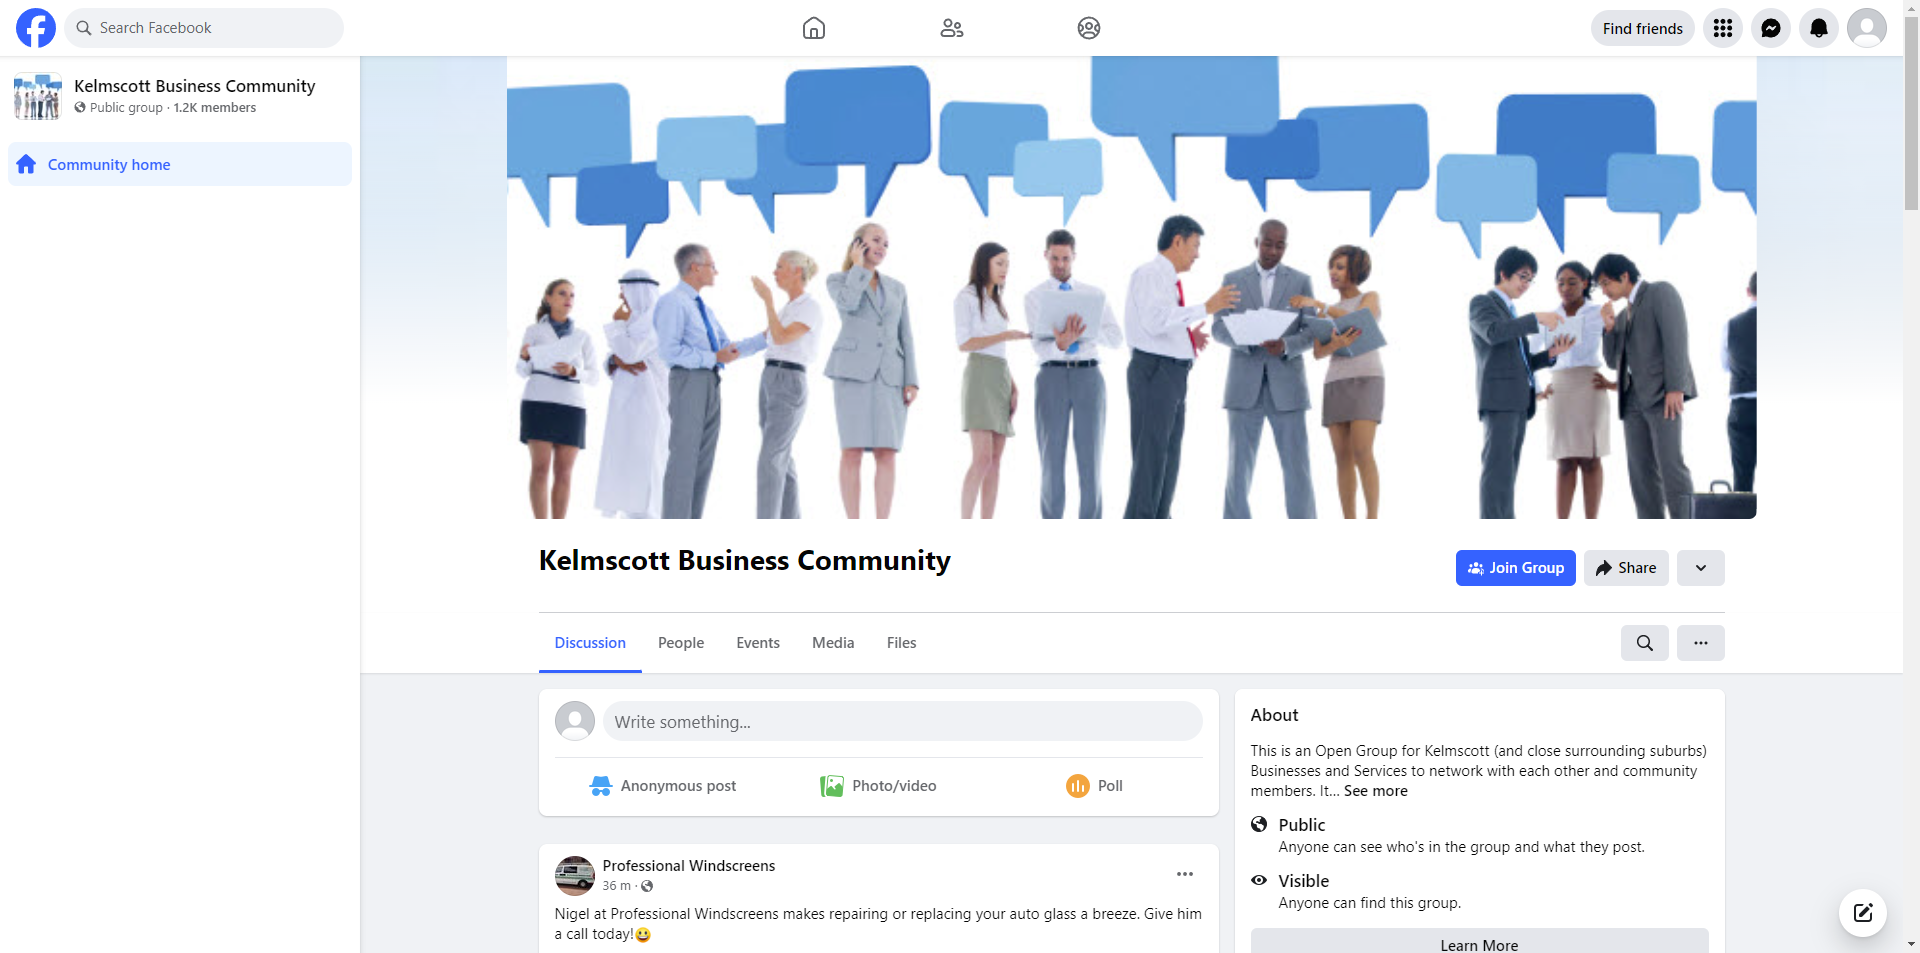 Kelmscott Business Community